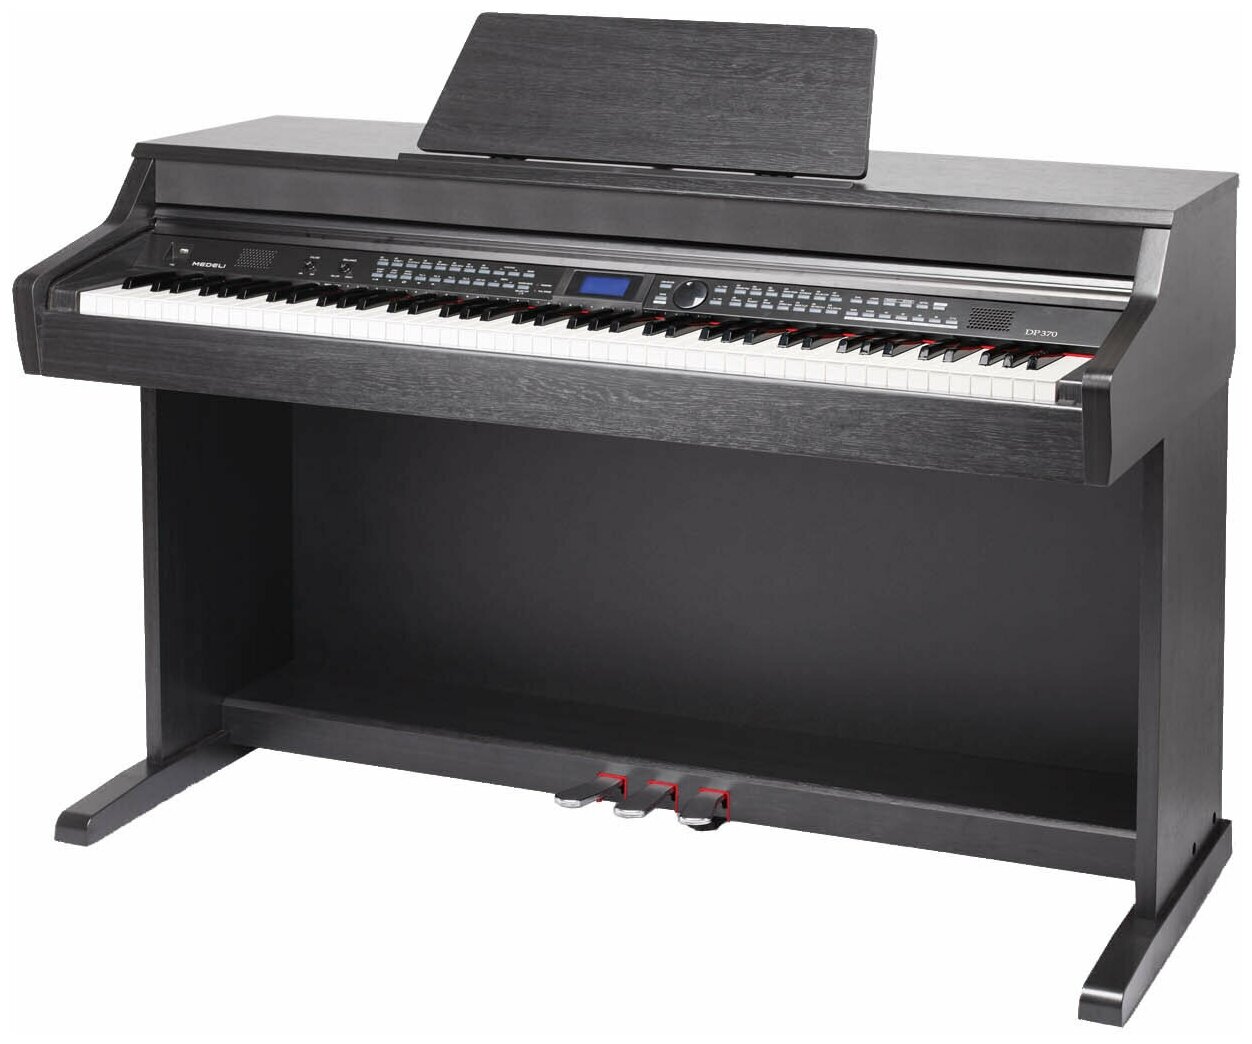 Цифровое пианино MEDELI DP370